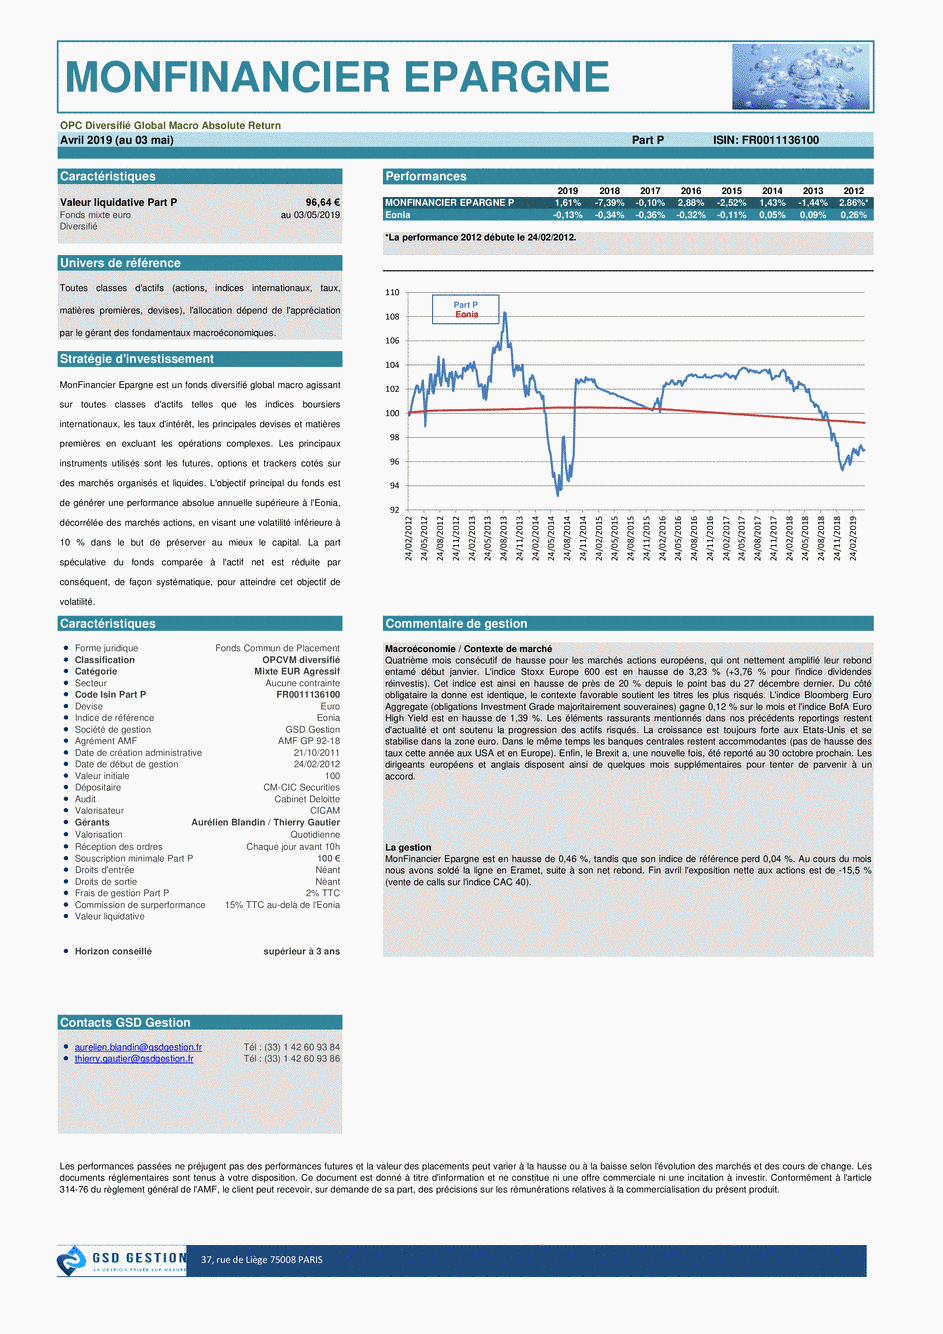 Reporting Monfinancier Epargne P - 09/05/2019 - undefined